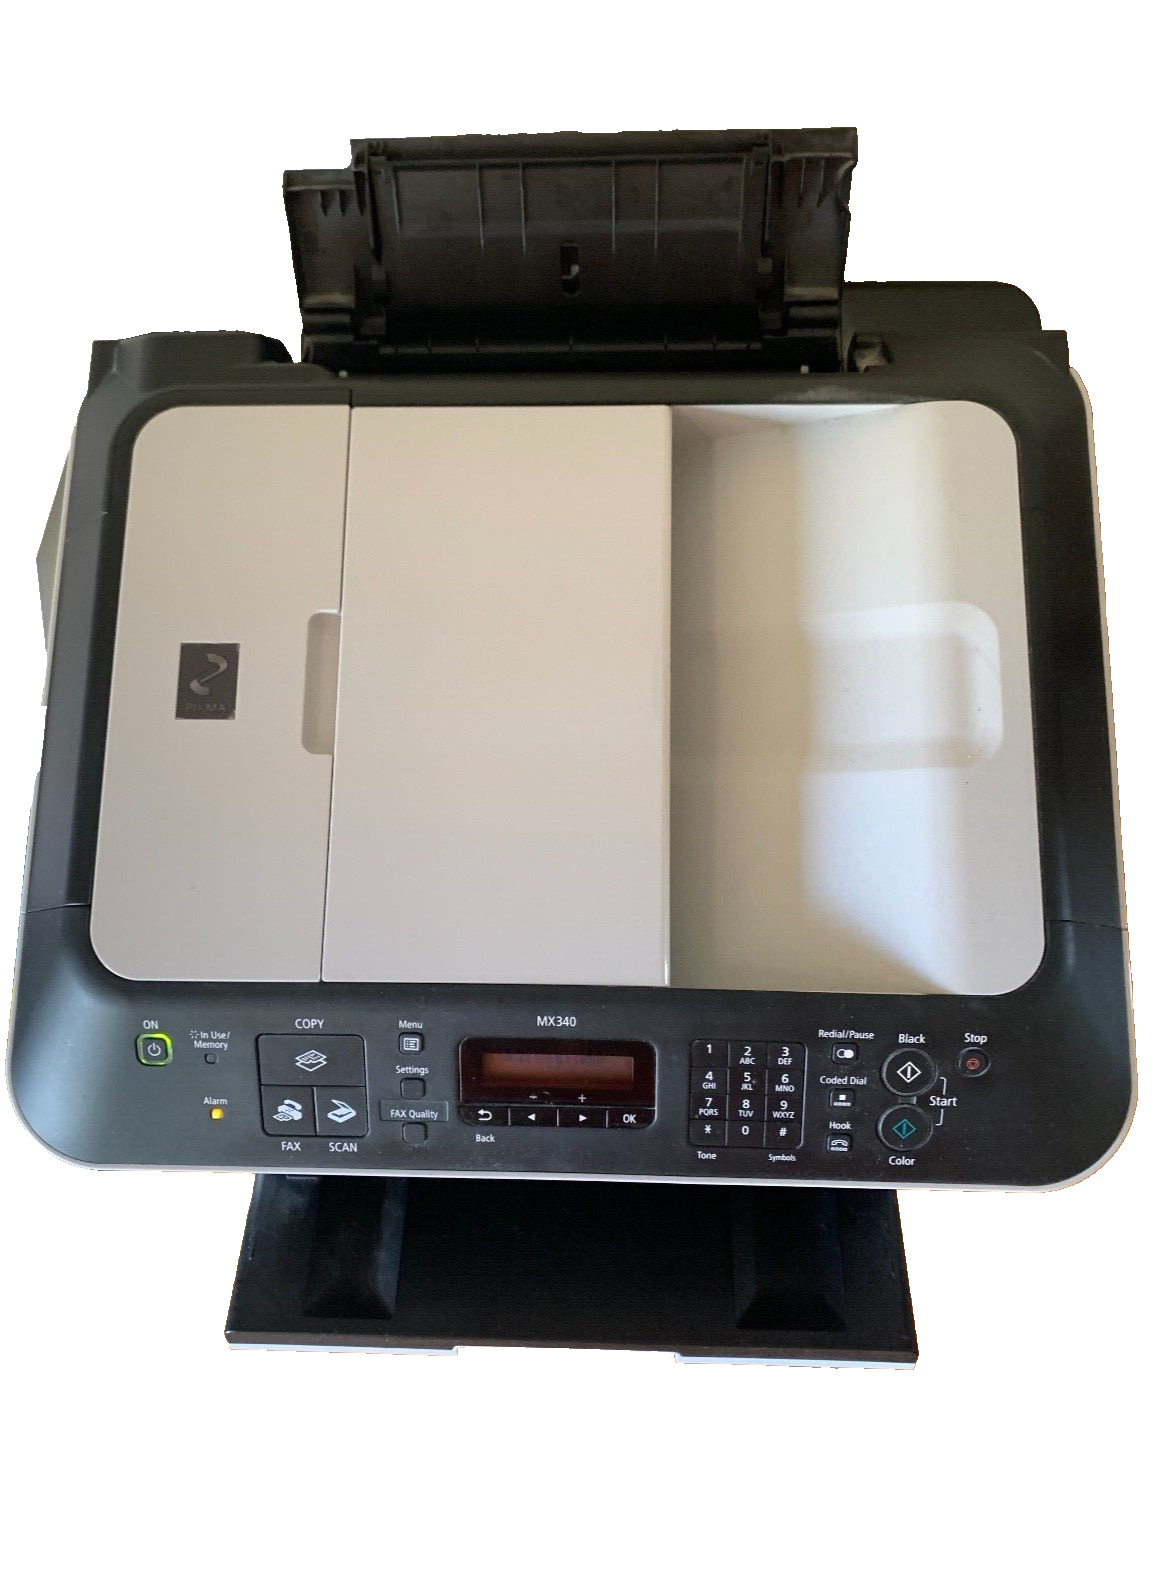 Canon Pixma K10349 Multifunction Printer White and Black VTG All In One Printer